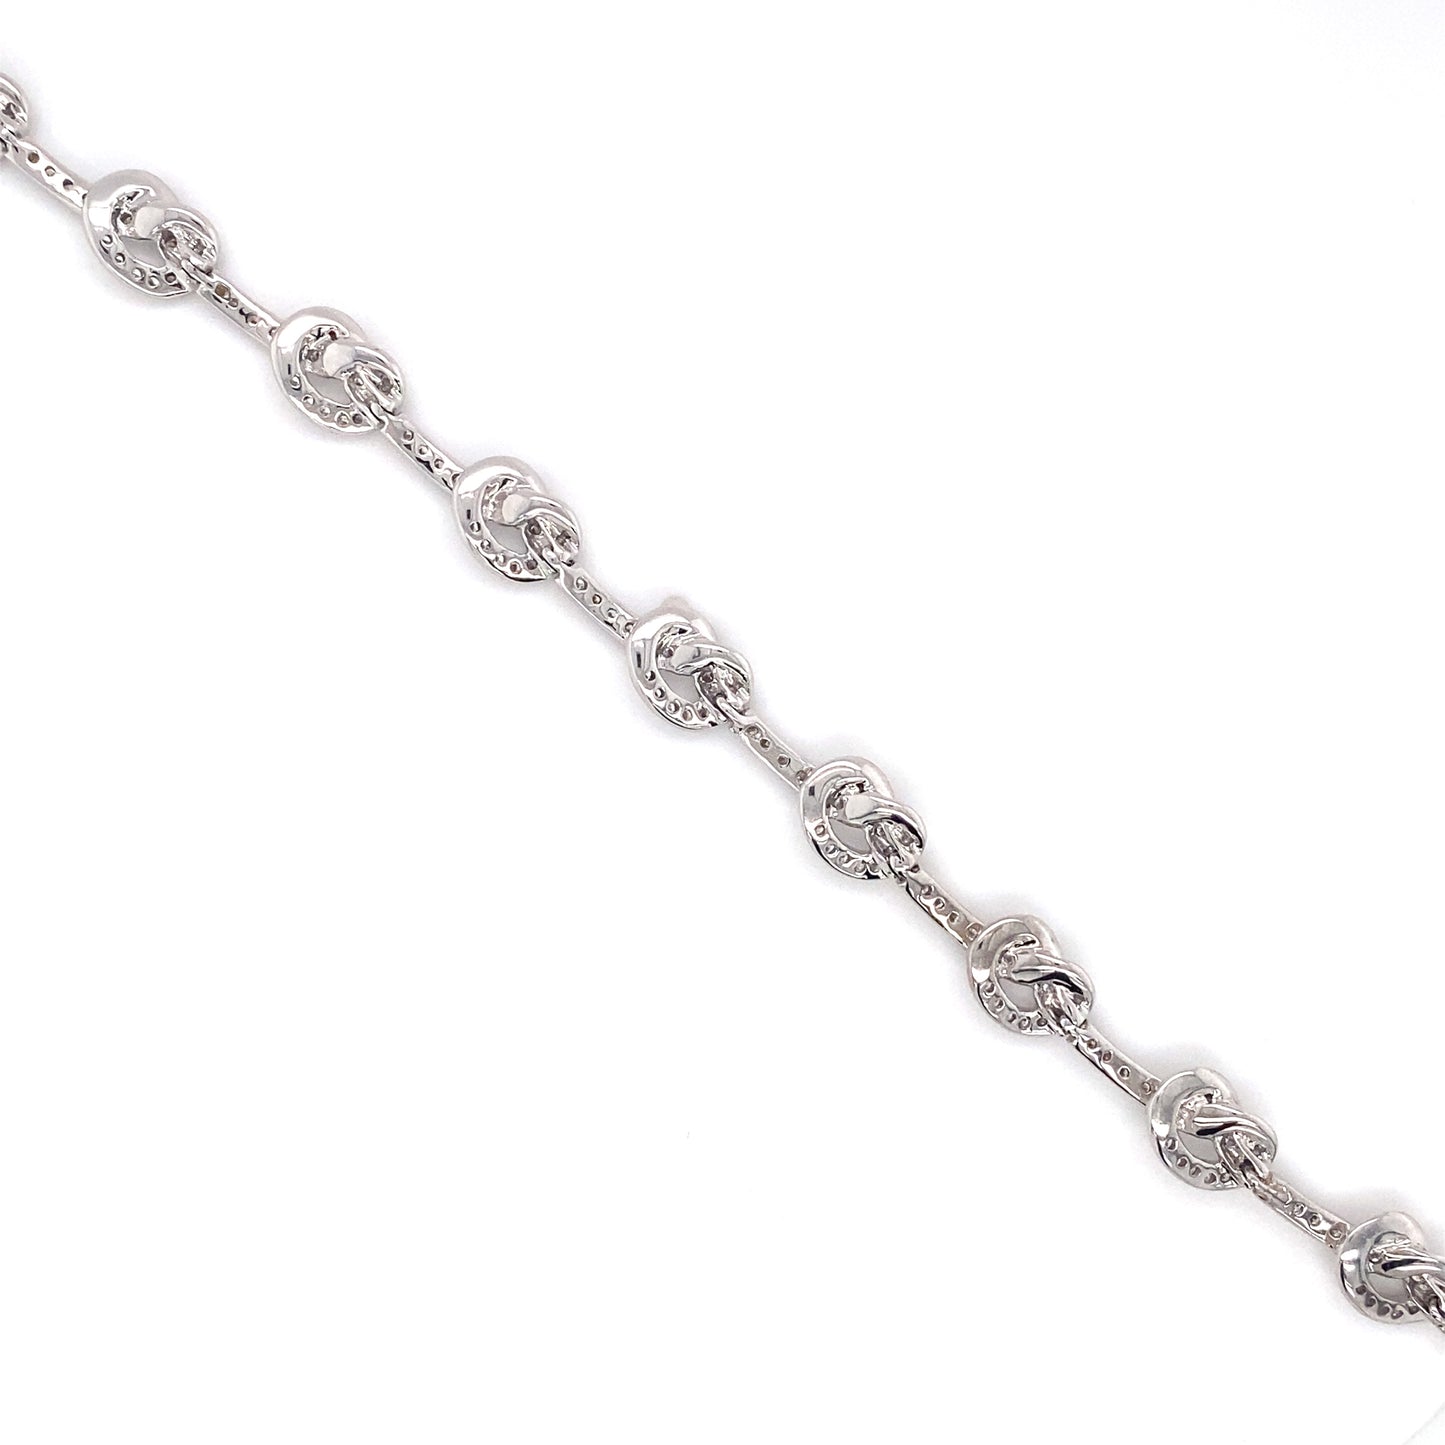 Circa 1950 2.27 Carat VVS Diamond Knot Link Bracelet in 18K White Gold